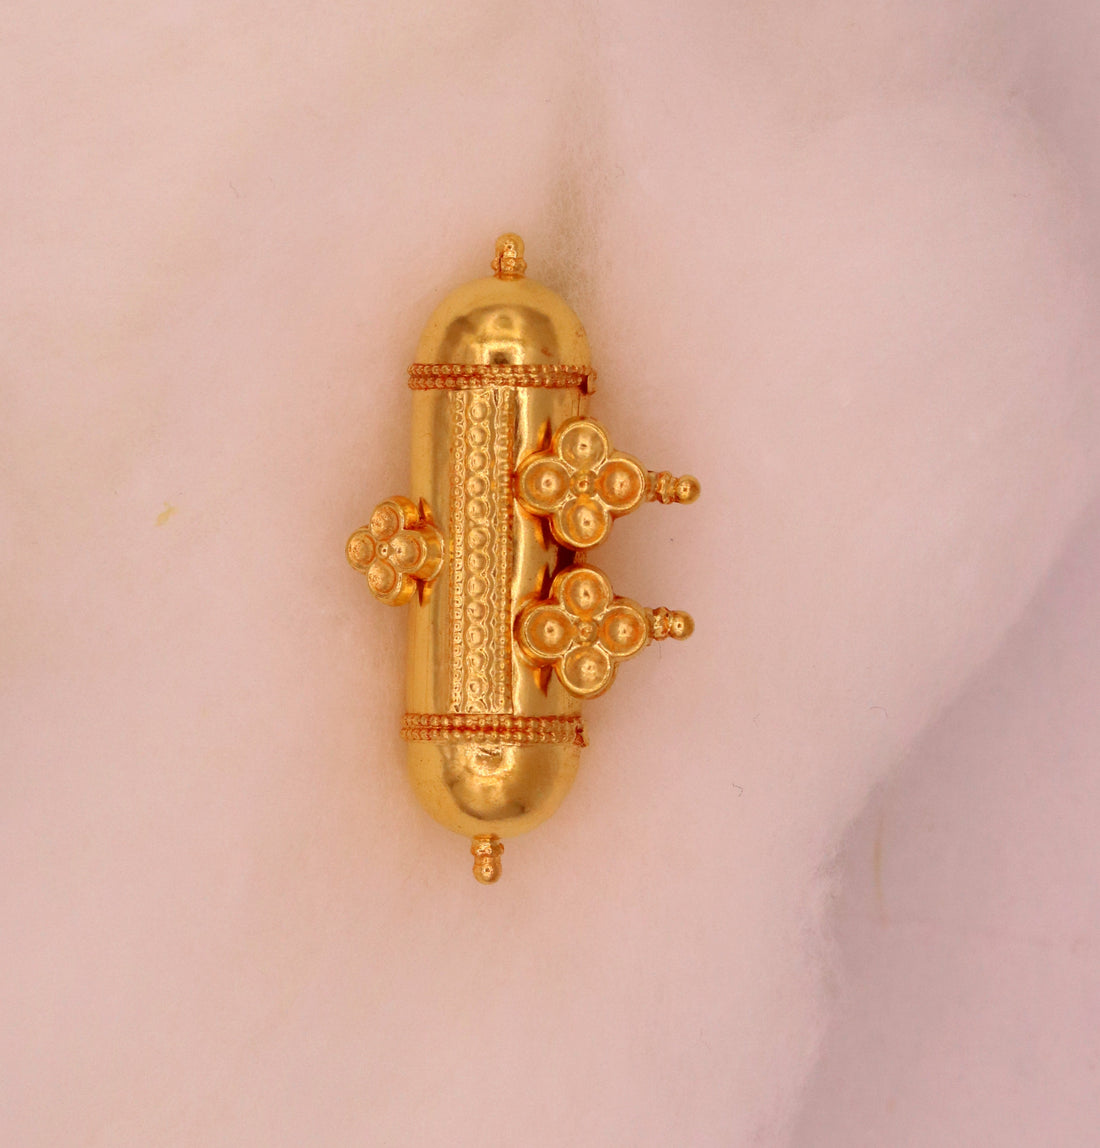 20k yellow gold handmade Vintage antique stylish rajasthan tribal amulet necklace pendant fabulous women jewelry - TRIBAL ORNAMENTS